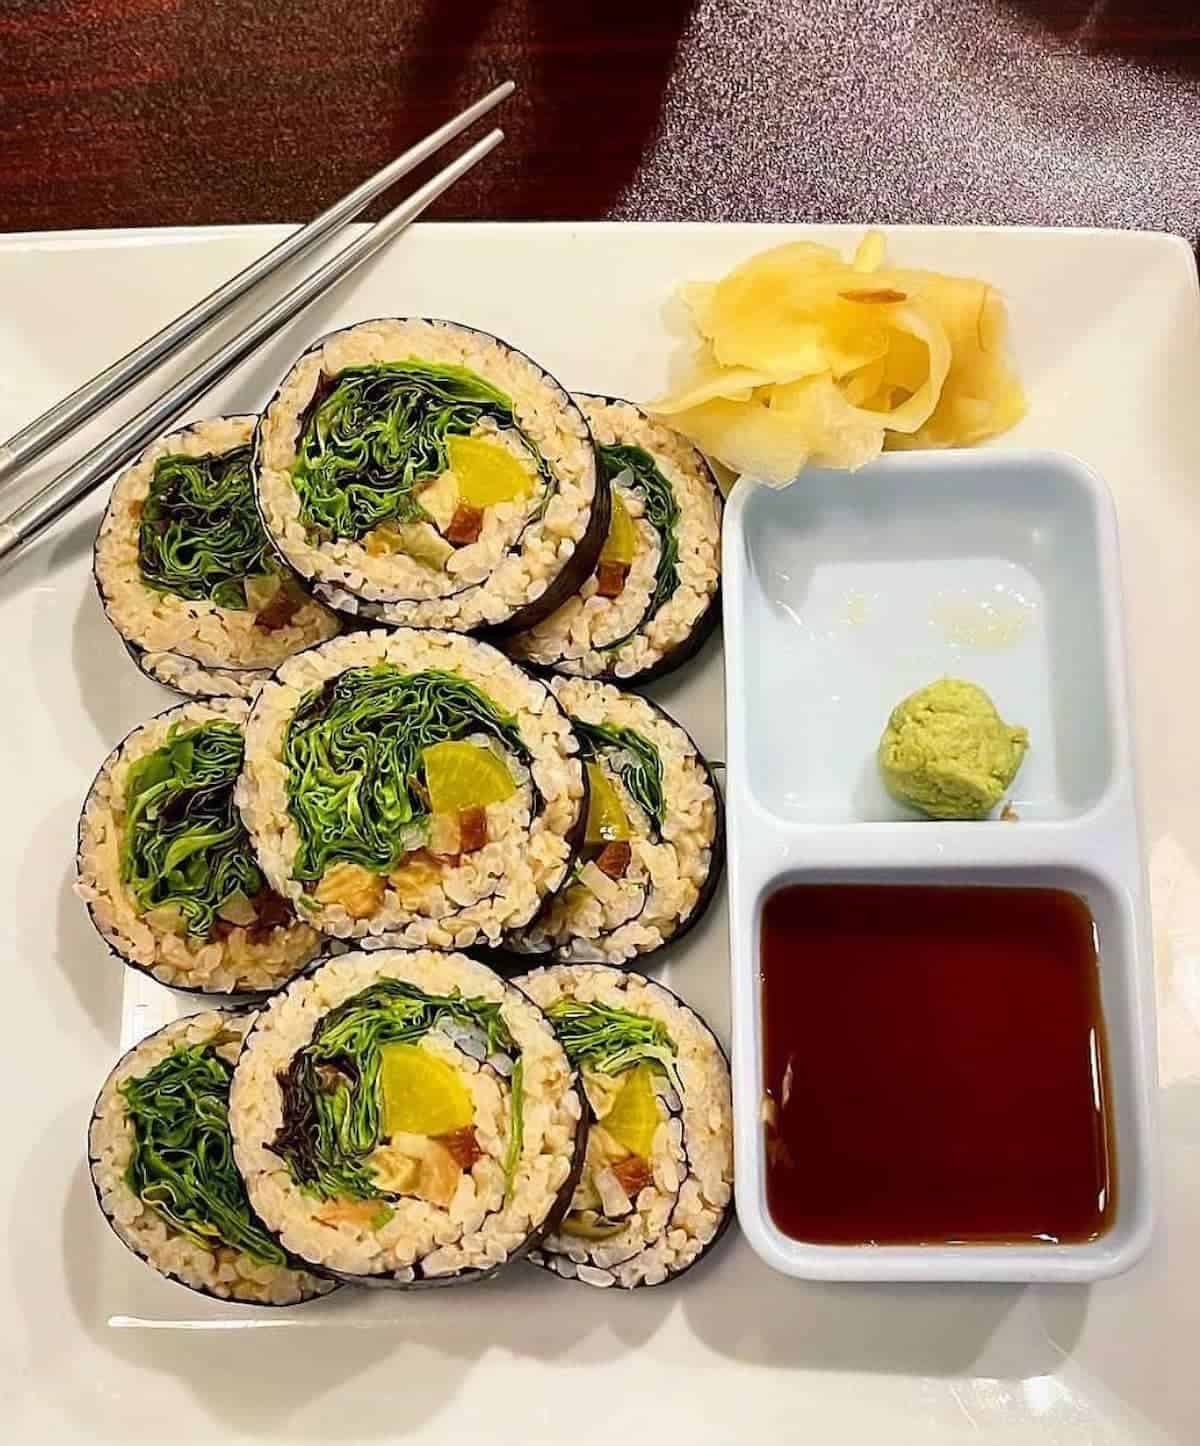 Vegan sushi from Amitabul Korean restaurant in Chicago.